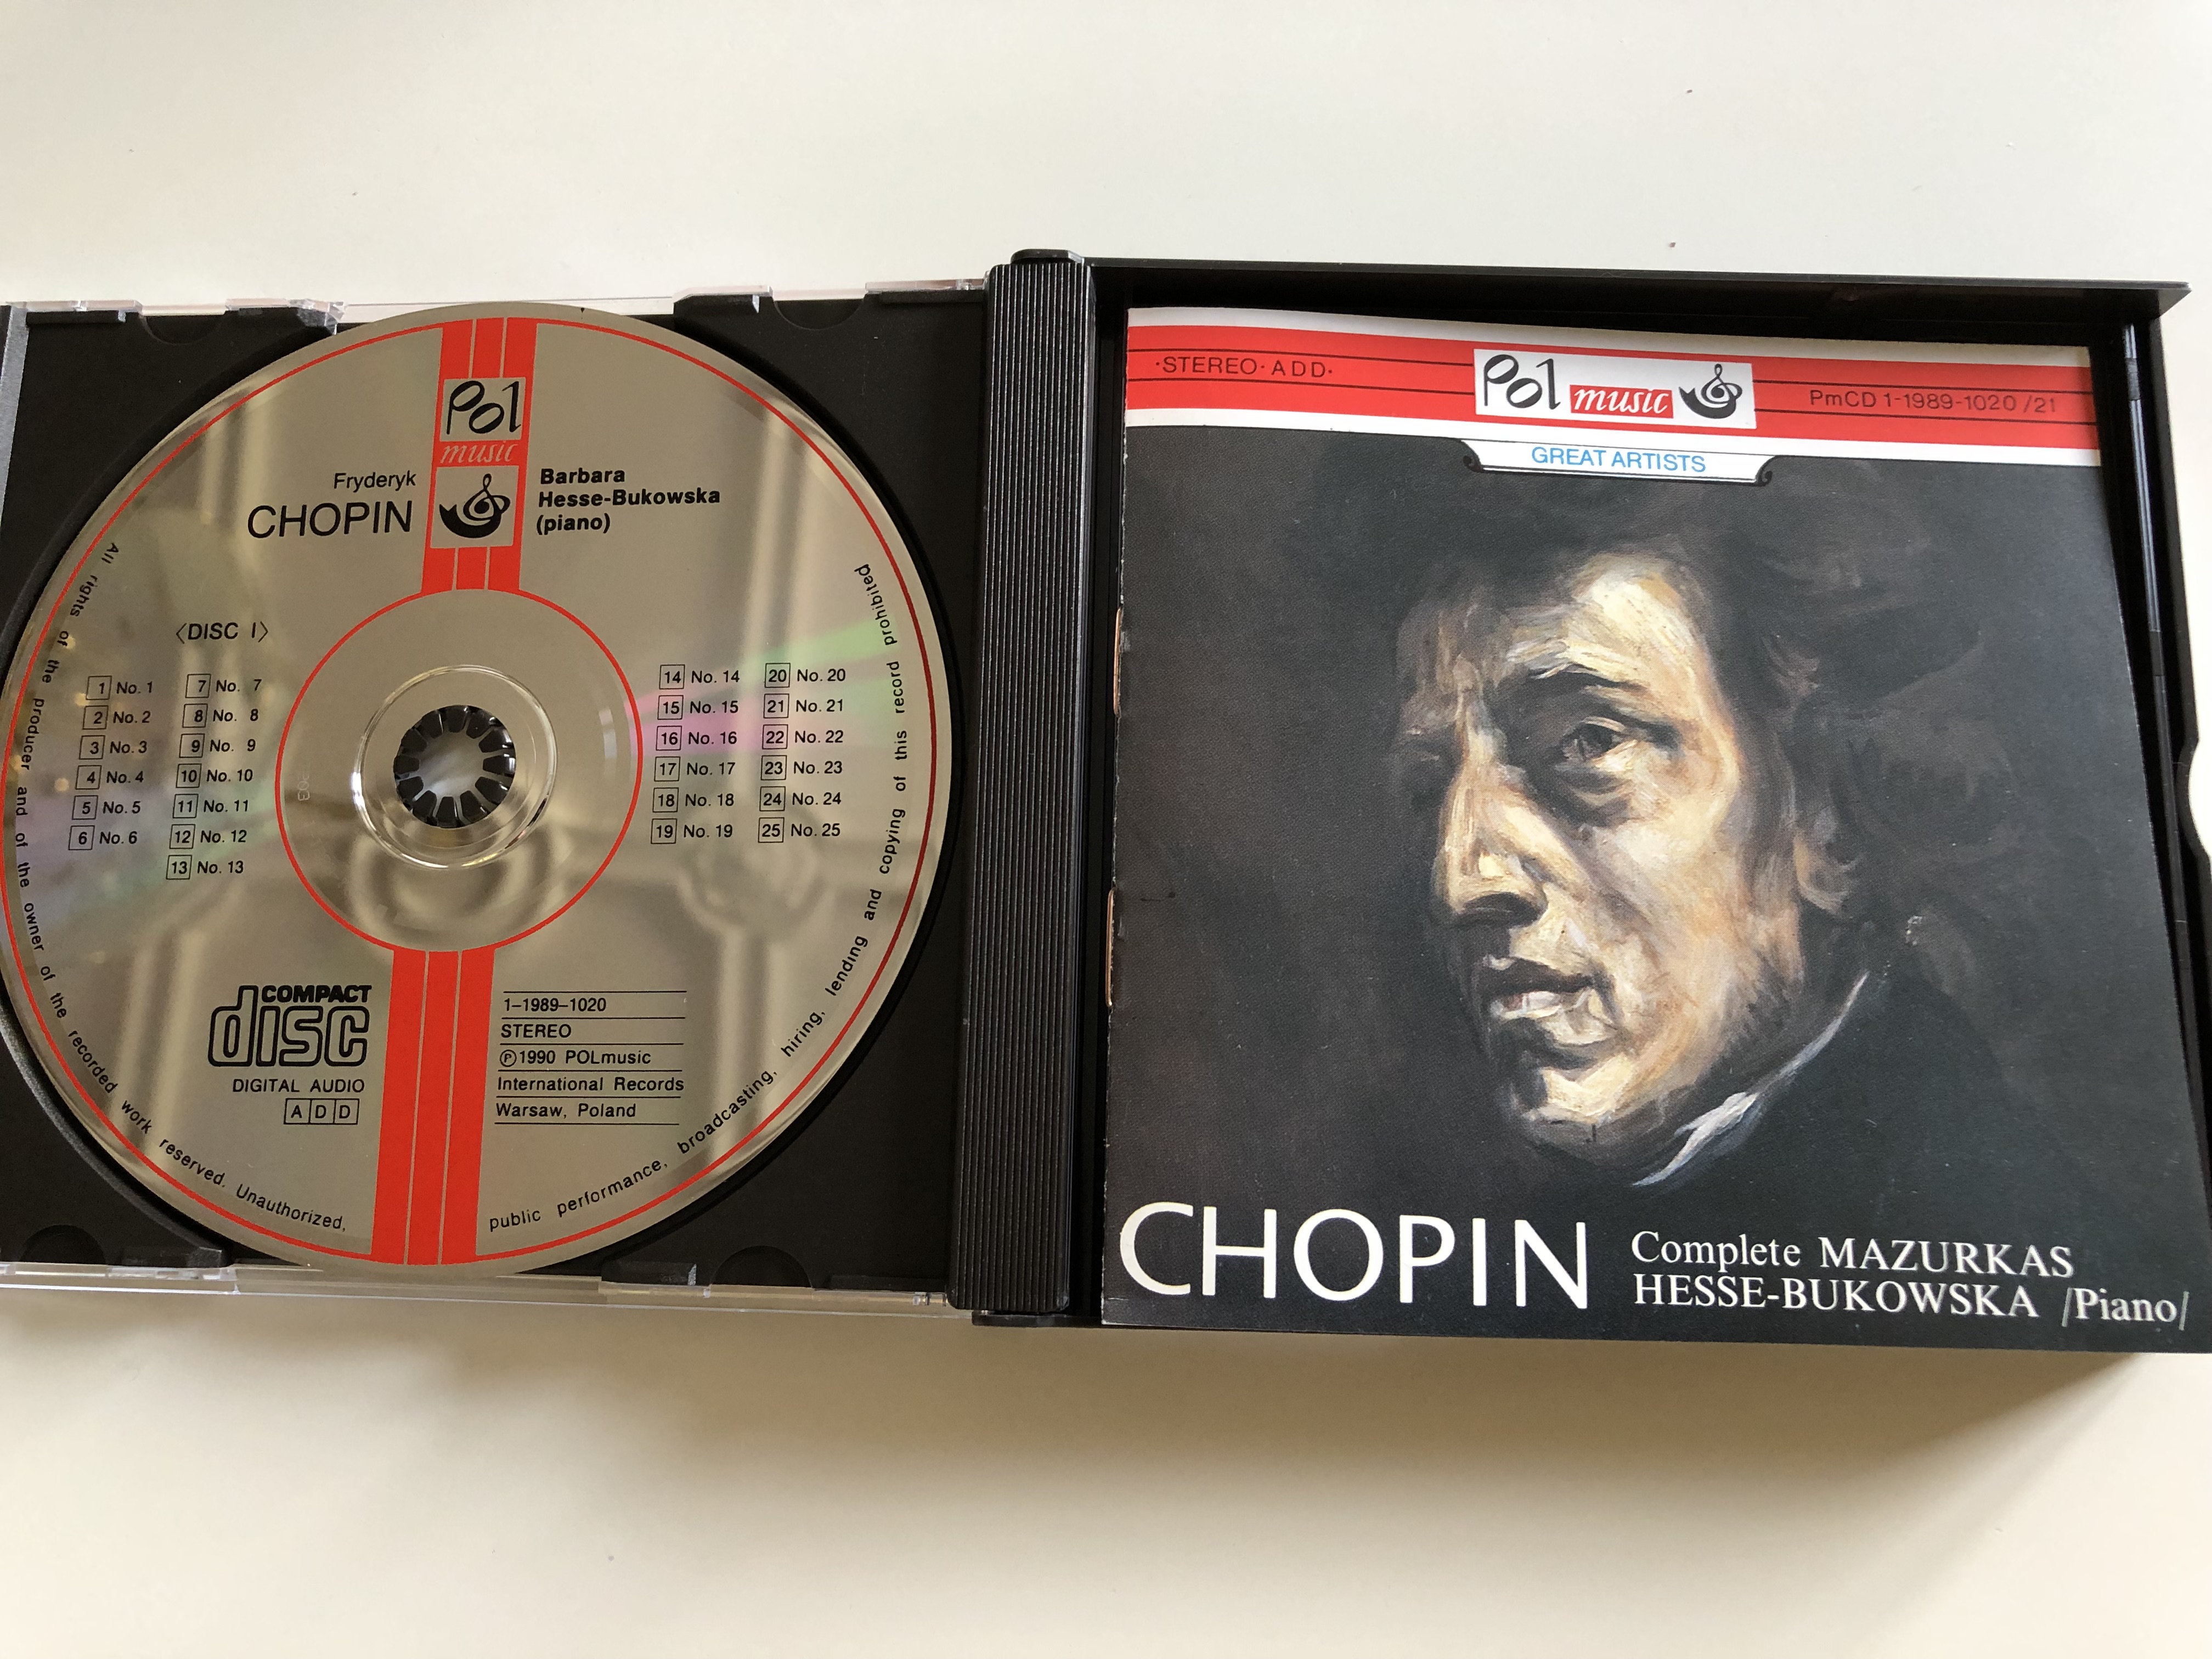 chopin-complete-mazurkas-barbara-hessse-bukowska-piano-pol-music-great-artists-pmcd-1-1989-102021-audio-cd-1990-2-discs-3-.jpg